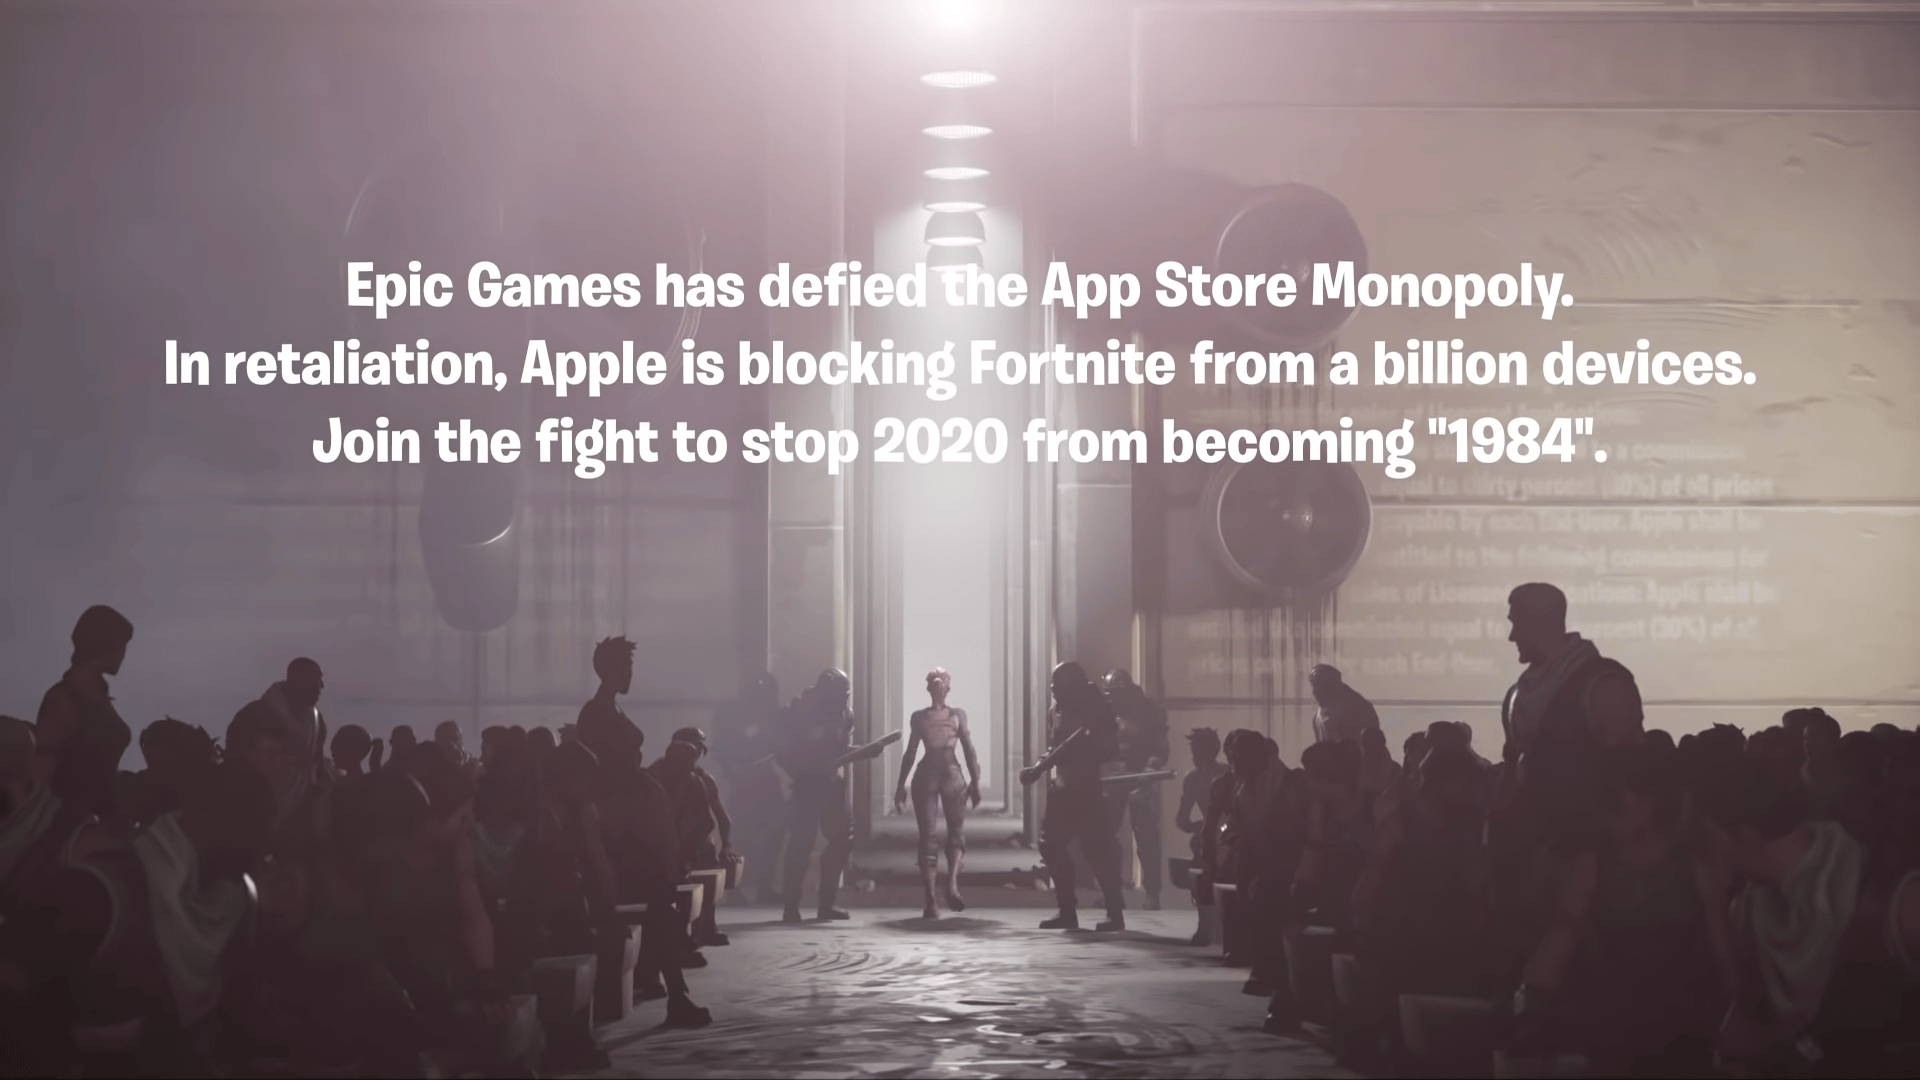 Epic Games' #FreeFortnite video.